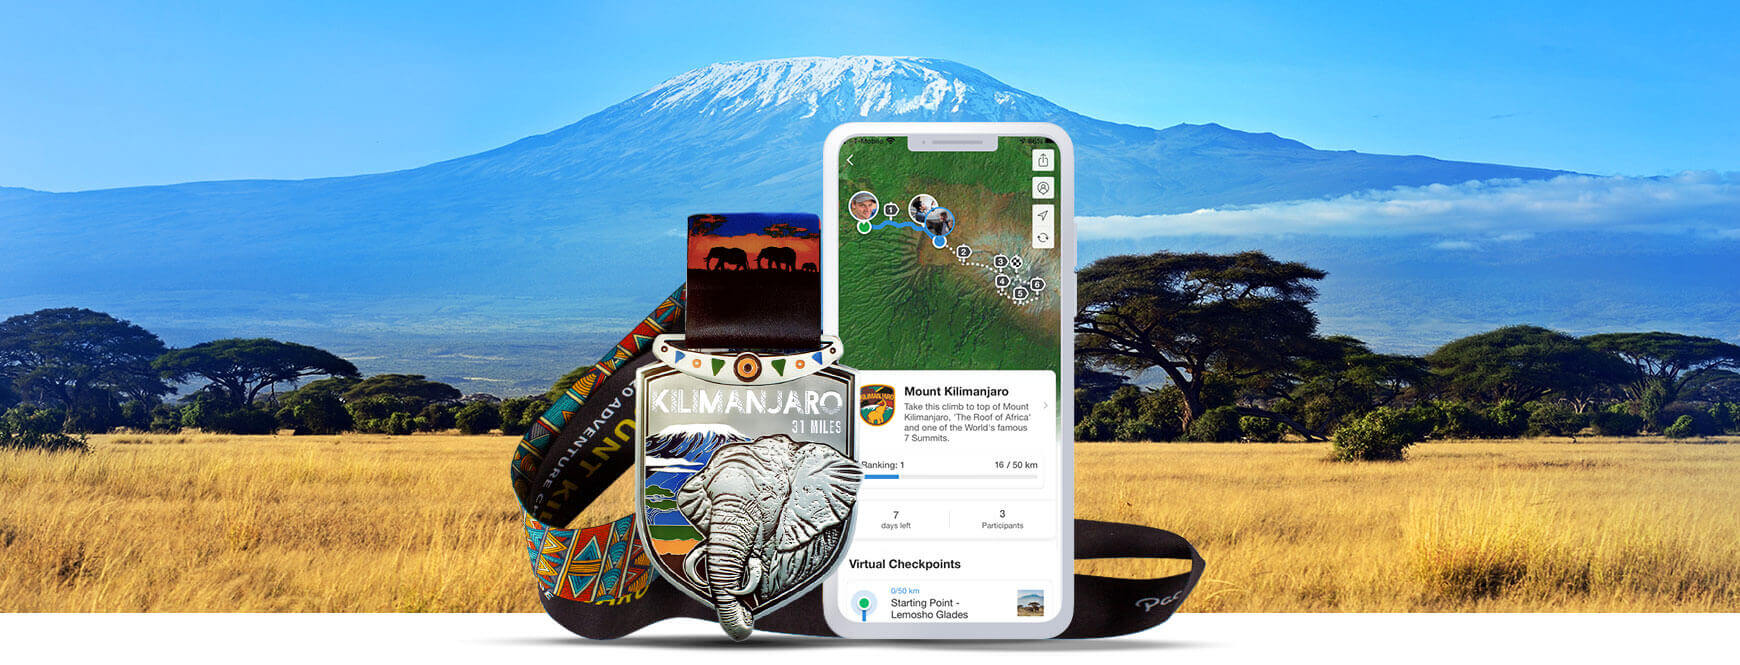 Mount Kilimanjaro Virtual Challenge